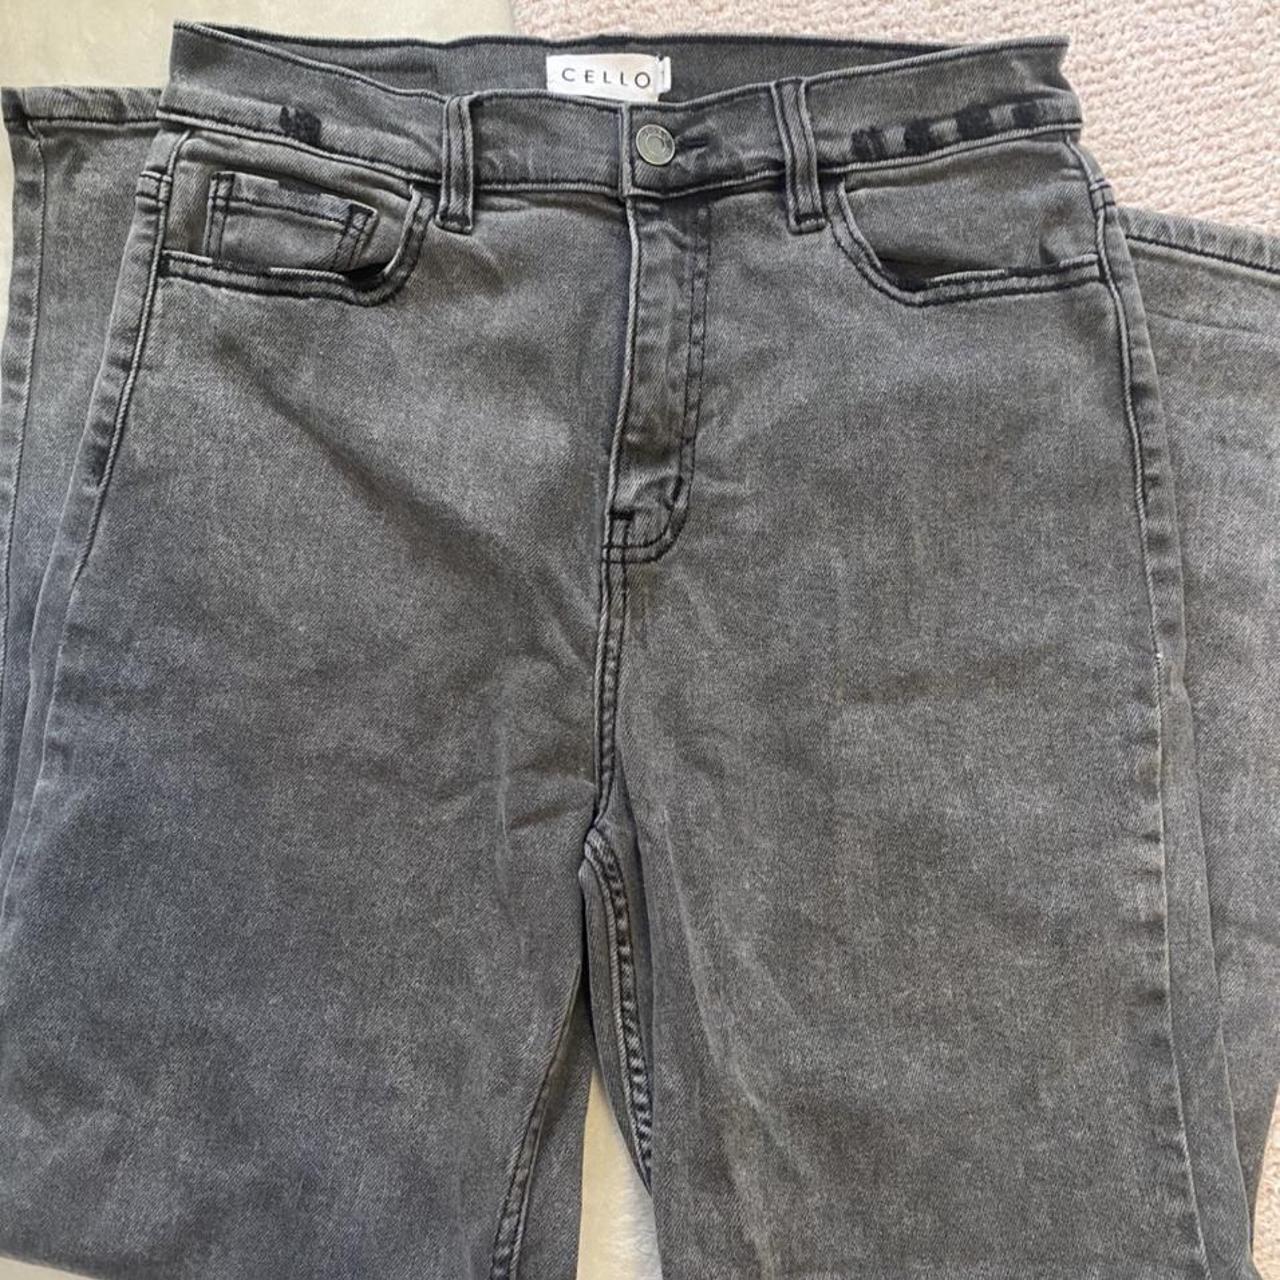 Product Image 1 - Straight leg grey denim jeans.